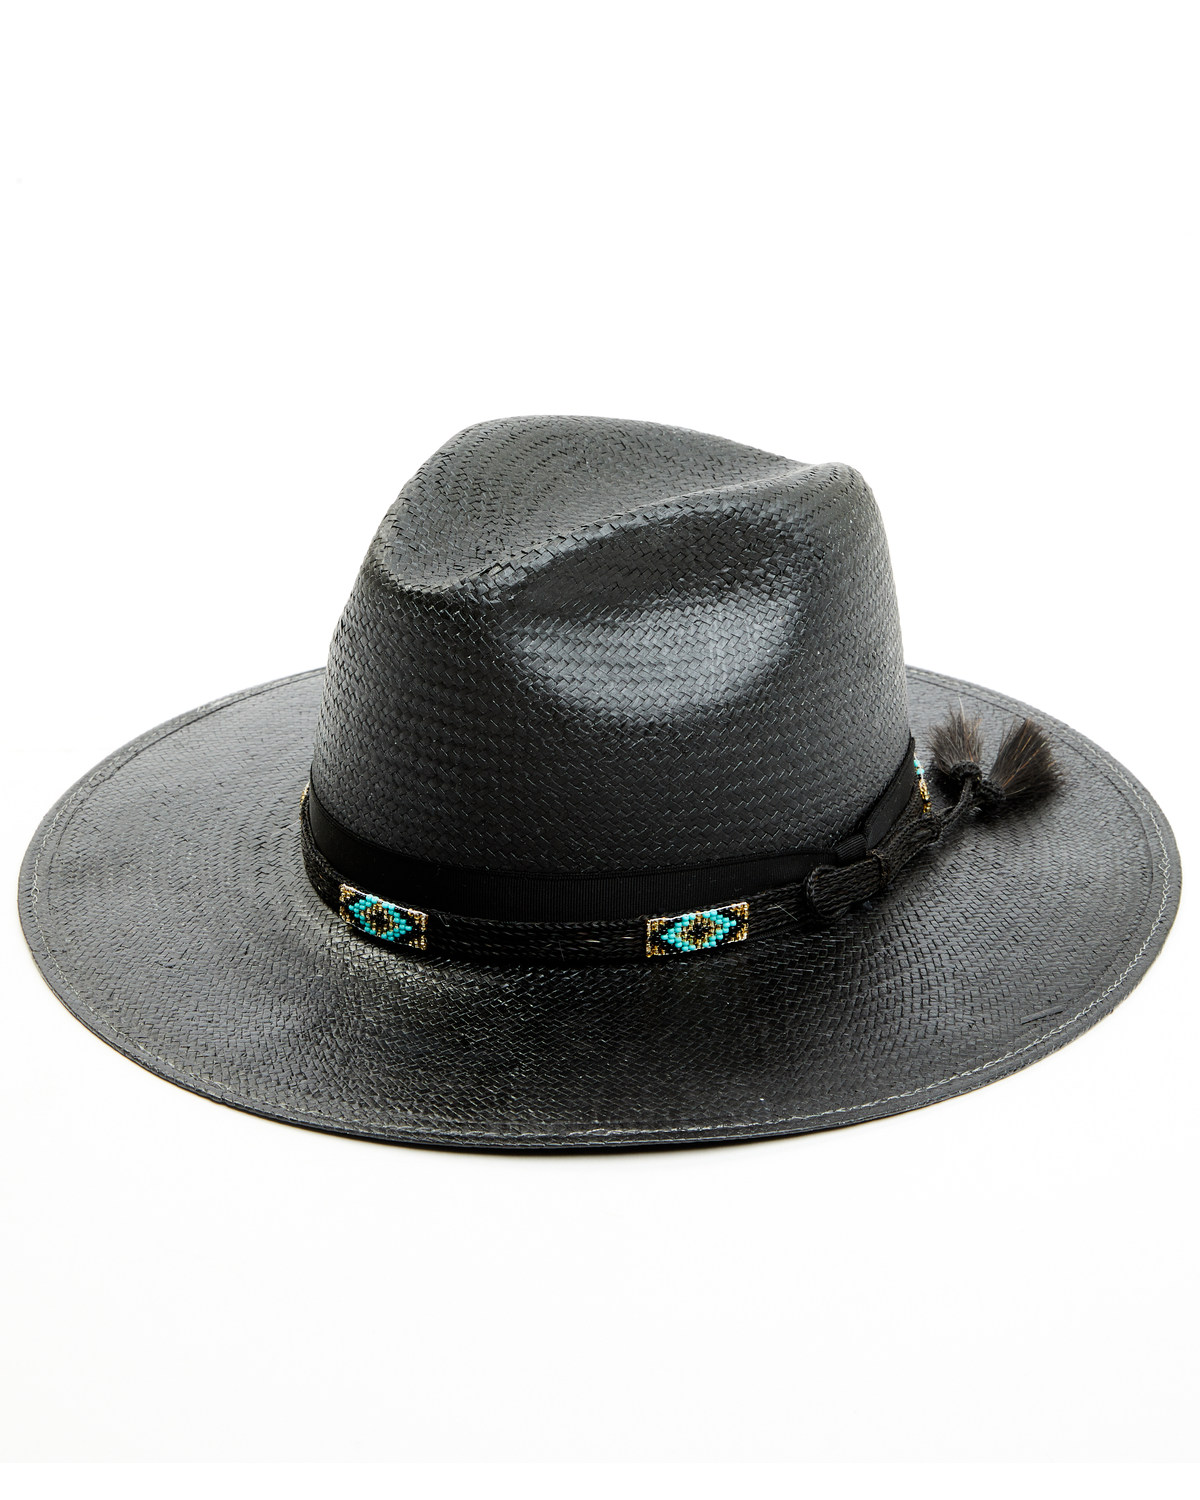 Stetson Men's Helix Beaded Straw Western Fashion Hat